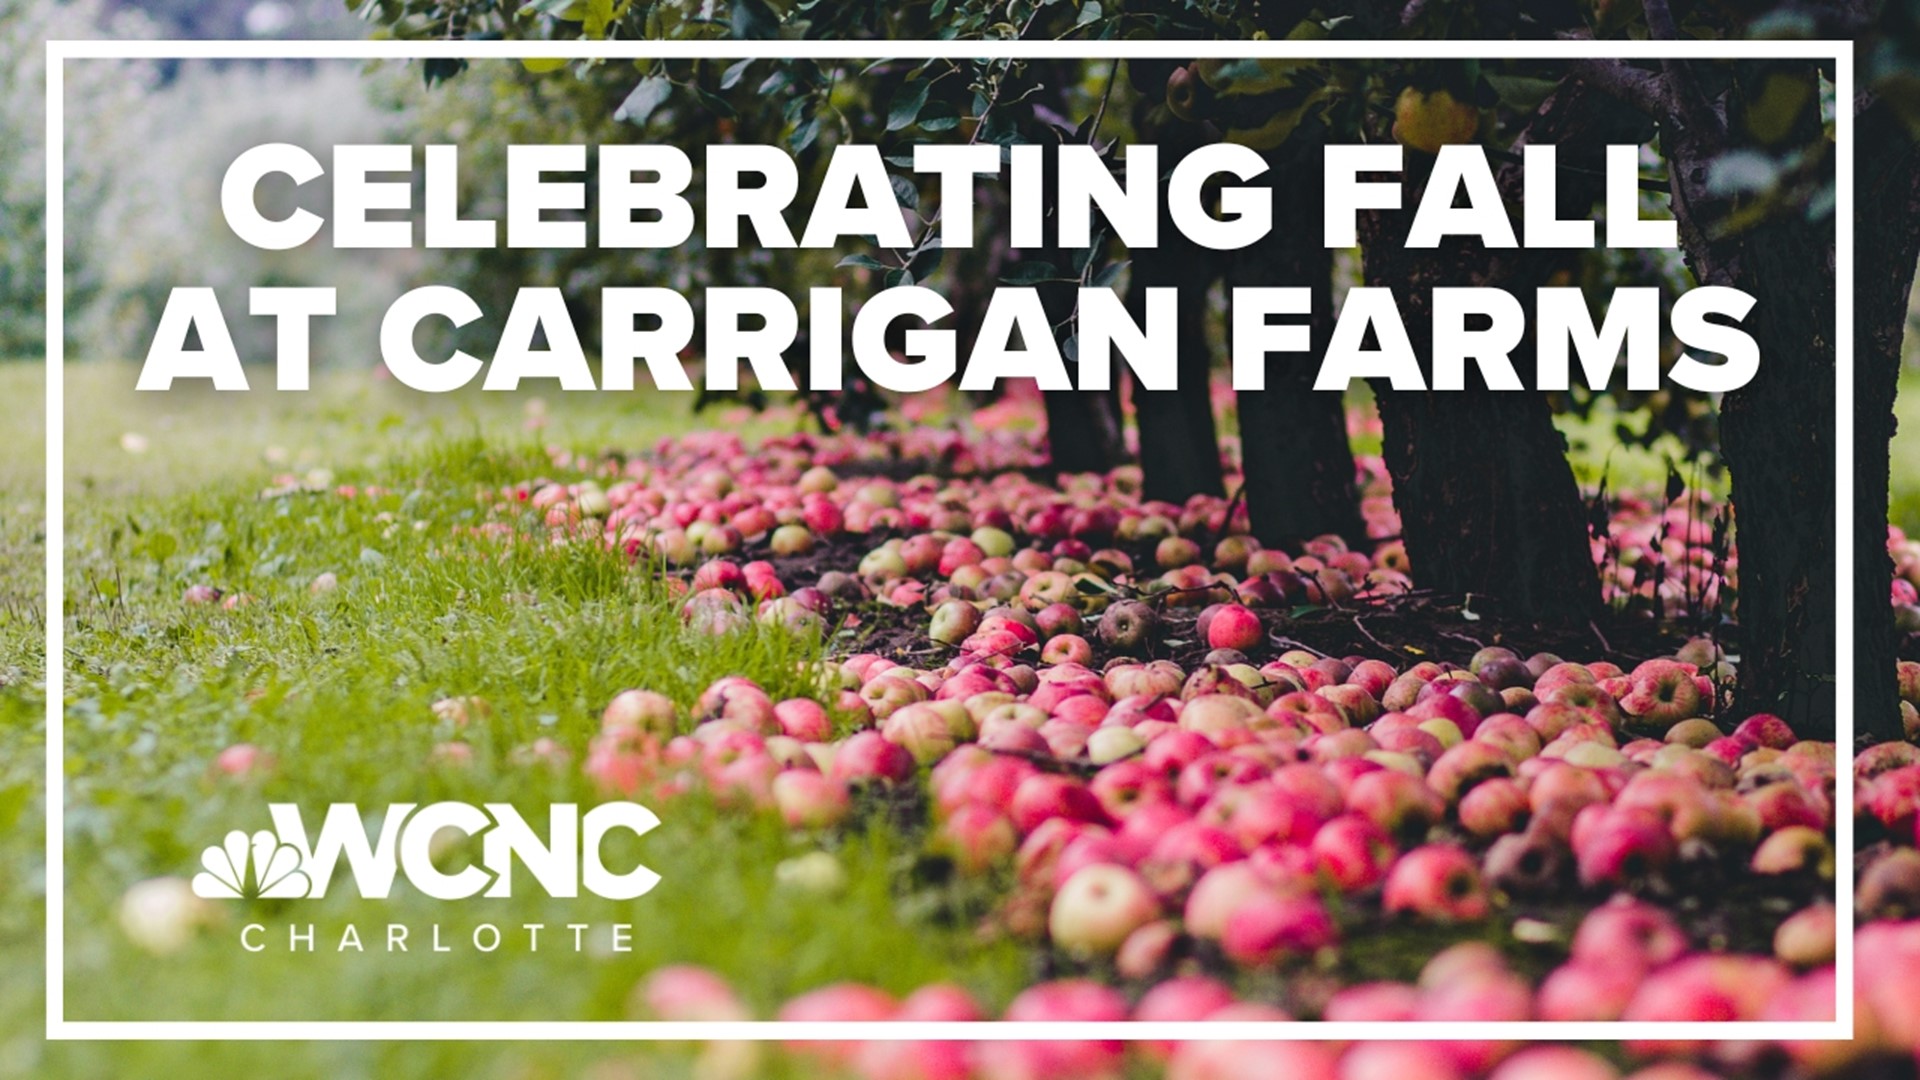 Celebrating the fall season at Carrigan Farms.